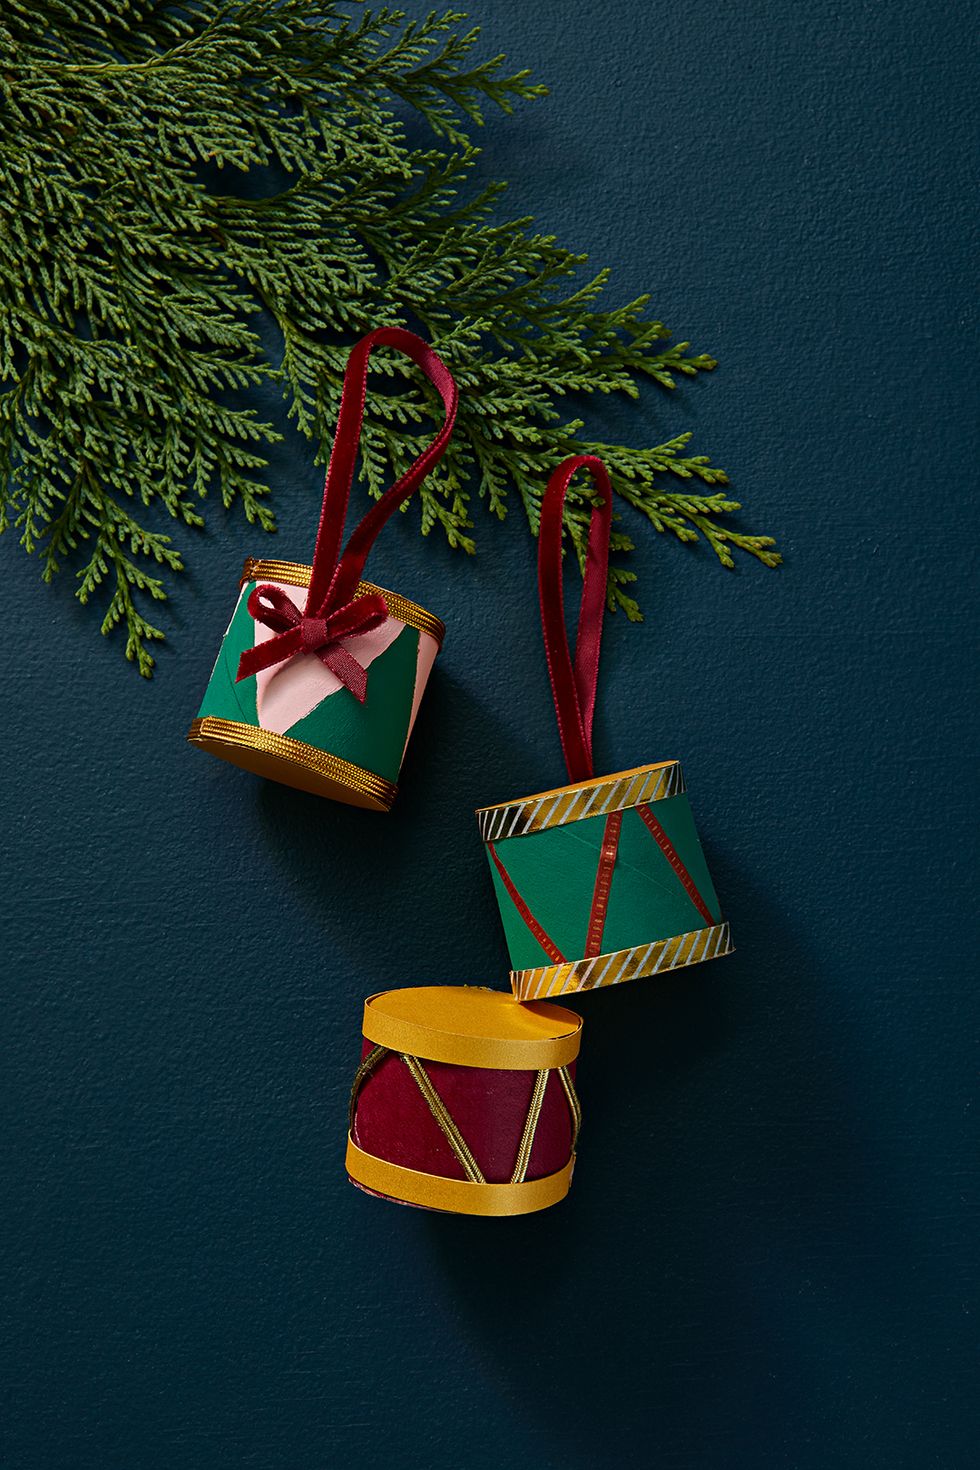 DIY Wood Slice Christmas Ornaments - Upcycled Treasures